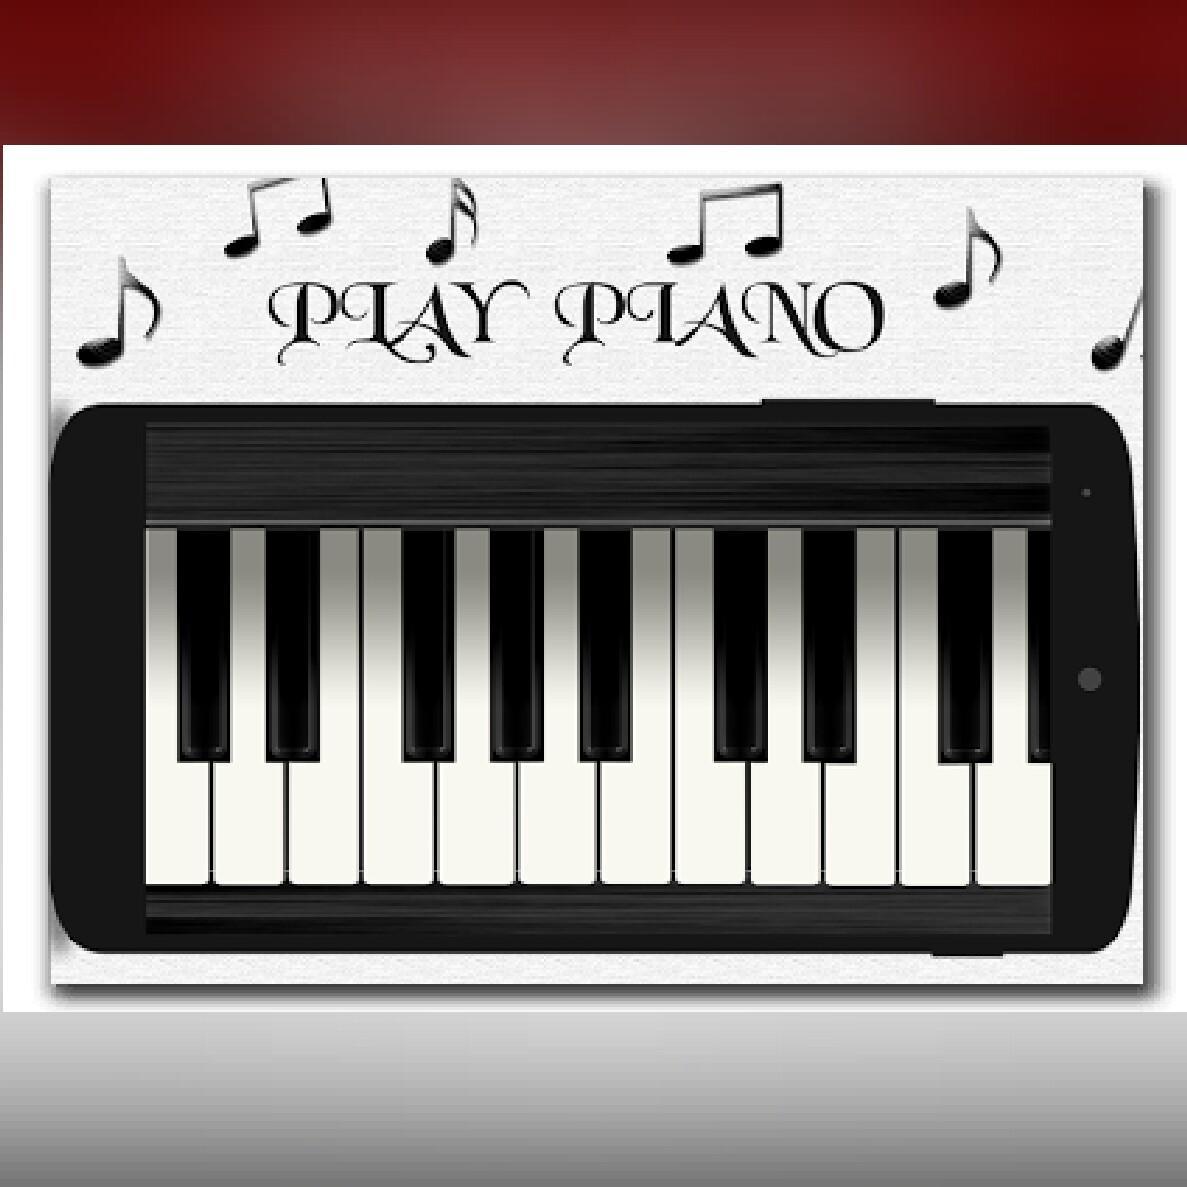 Emin Play Piano. Playable Piano rdt2. We Play рояль. Play Piano маленькая картинка. Sister play piano